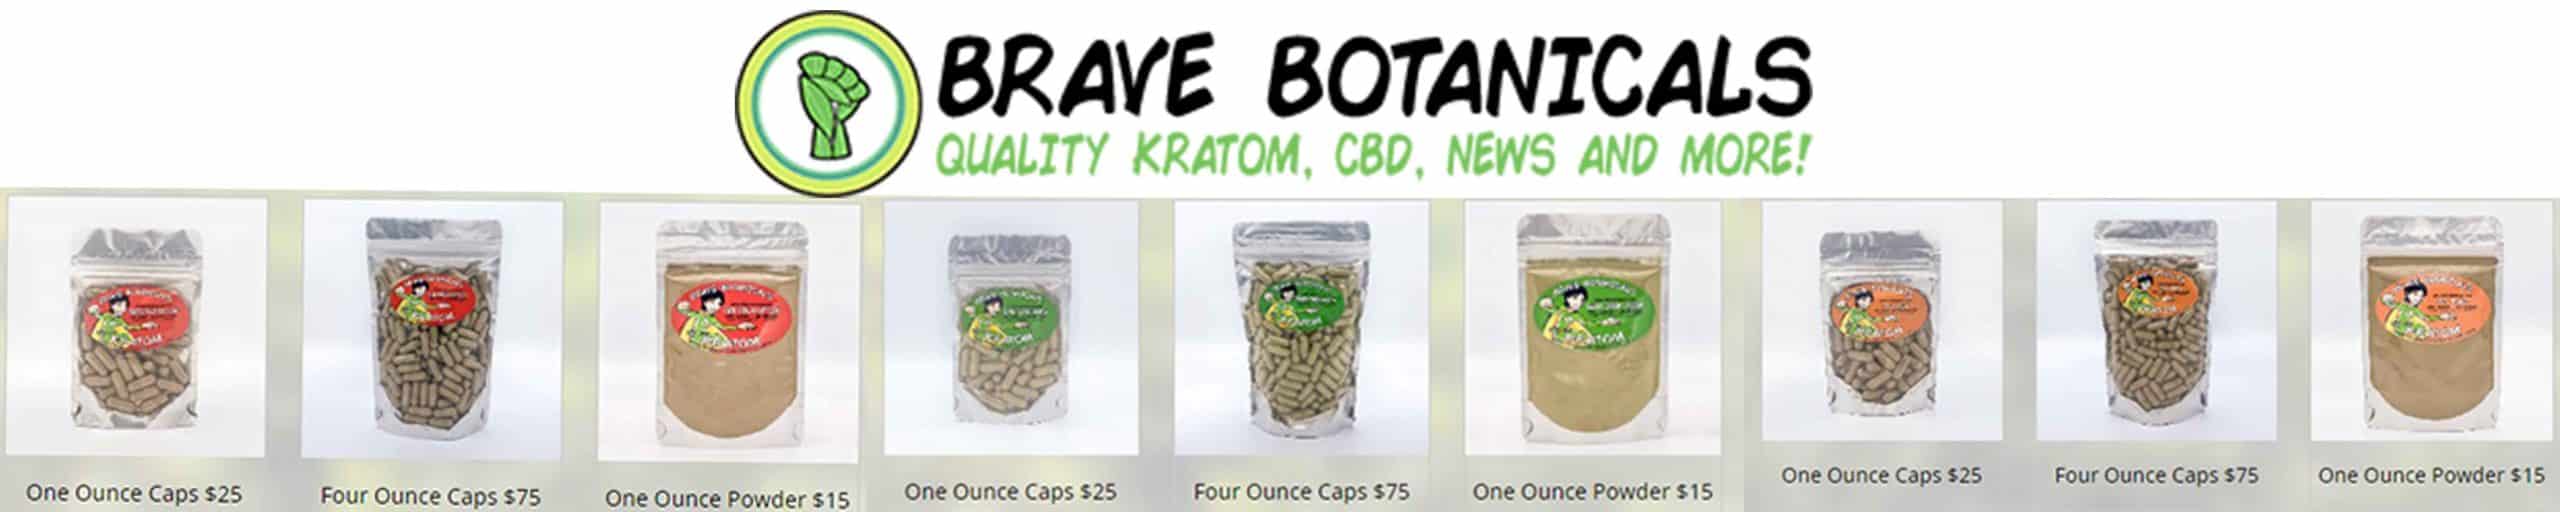 image of brave botanicals products